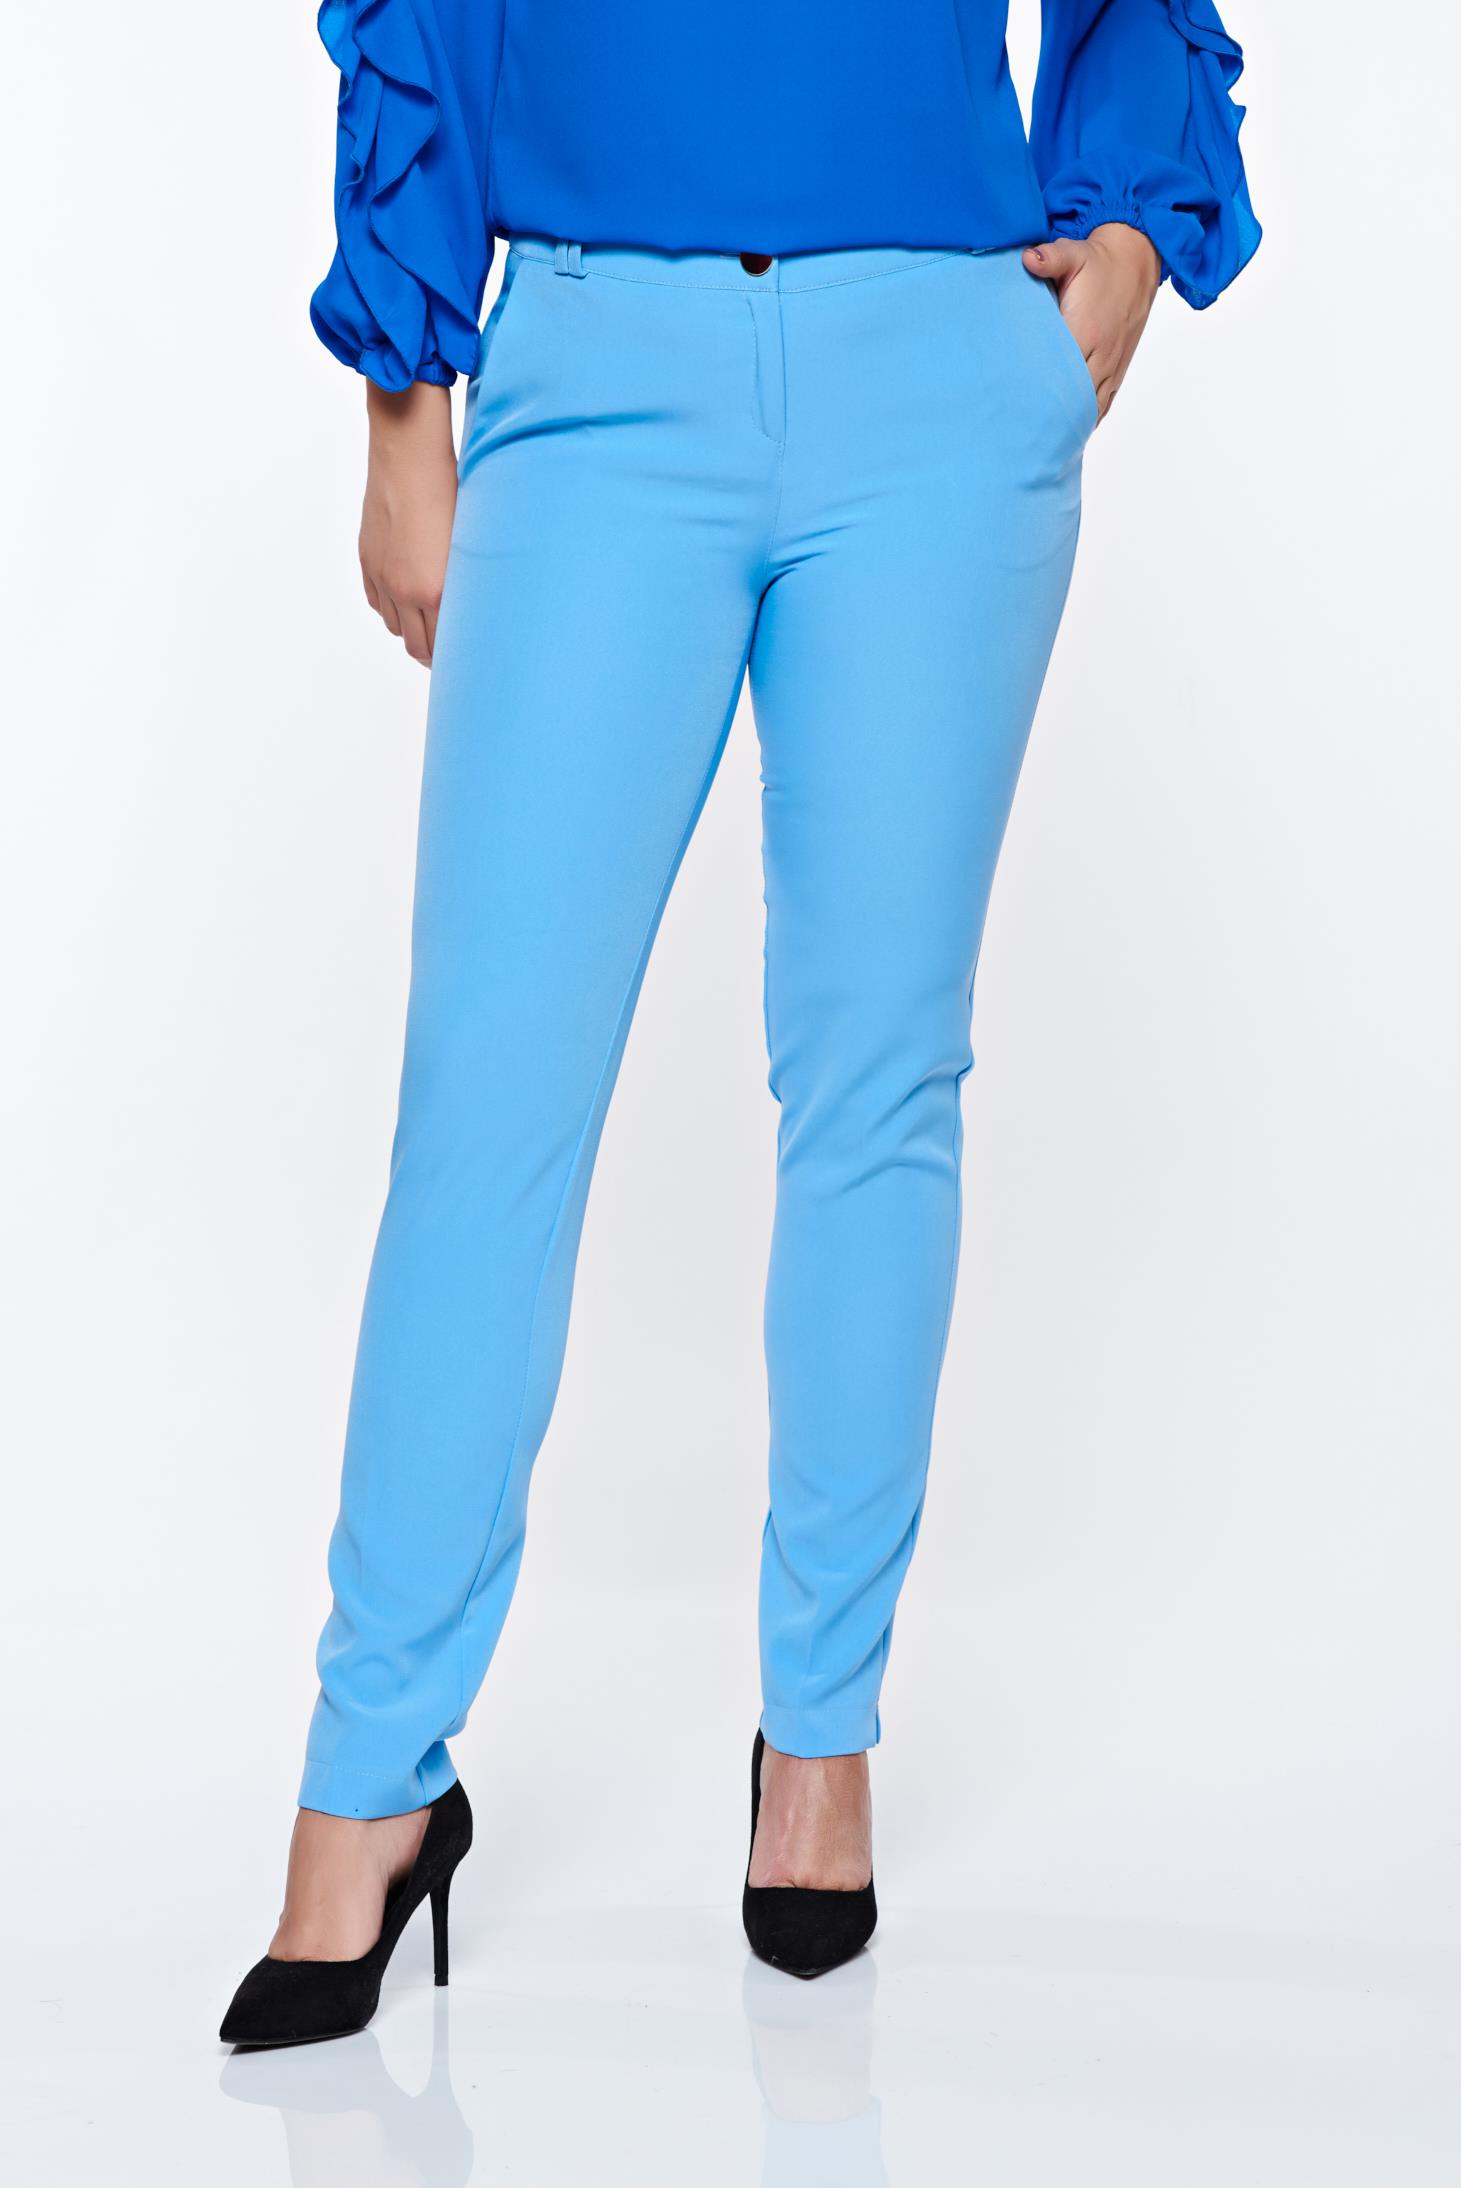 PrettyGirl lightblue elegant conical trousers with medium waist with pockets slightly elastic fabric 1 - StarShinerS.com